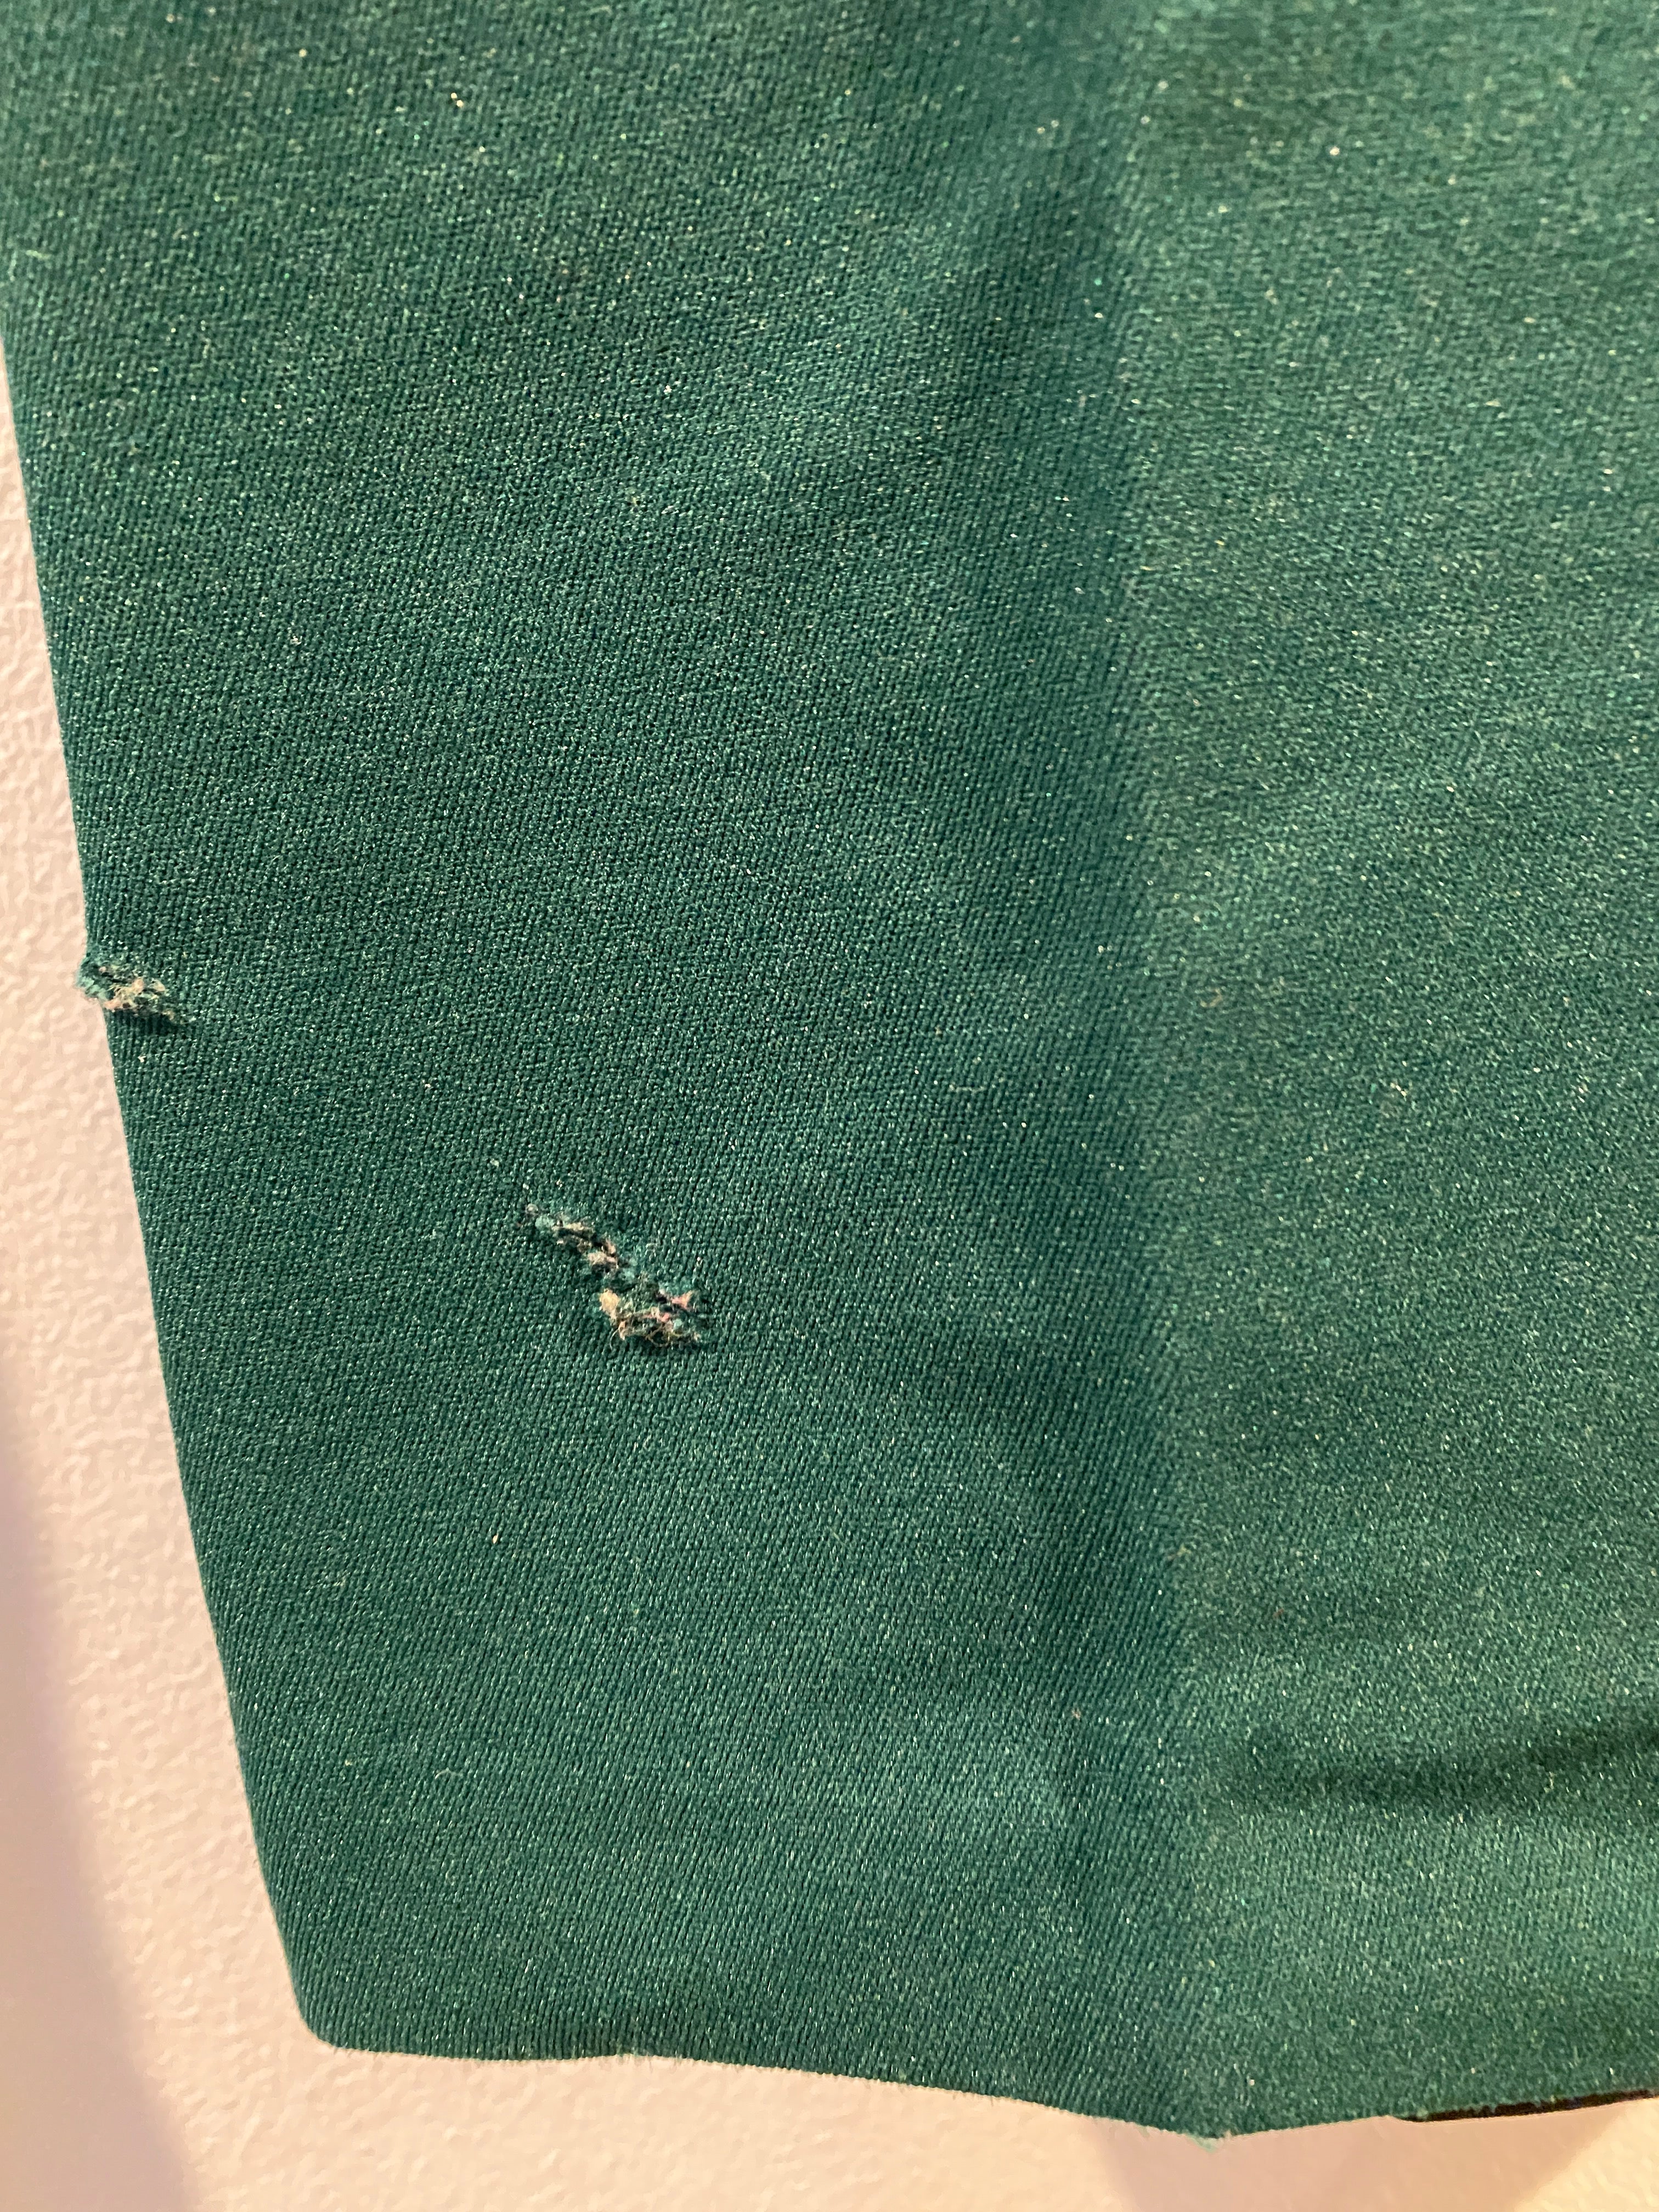 Vintage Olympia green ski pants. 2 small tears